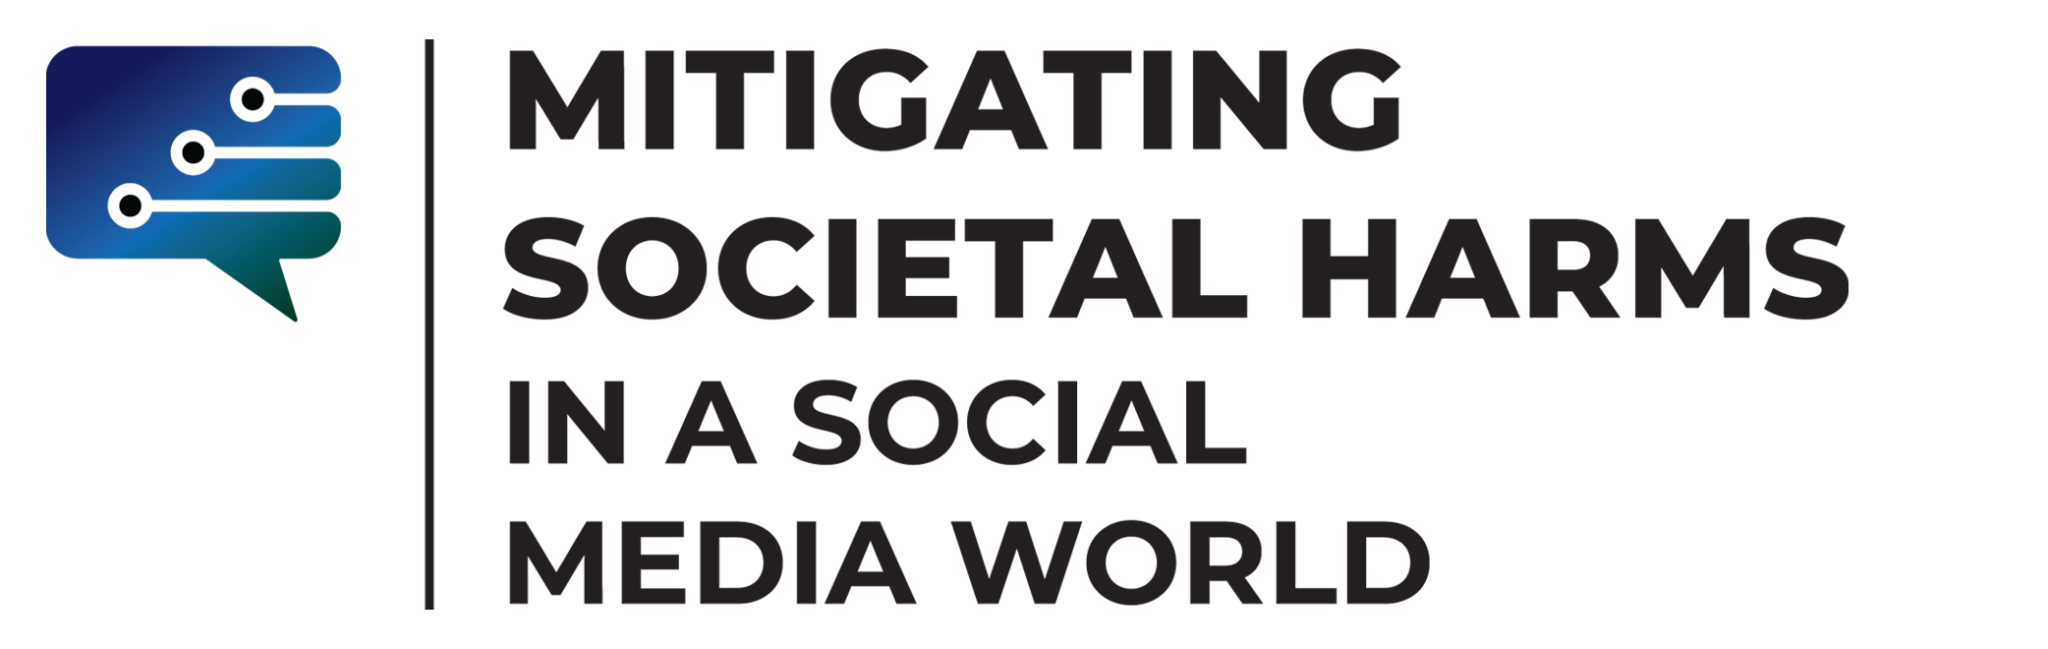 Mitigating Societal Harms in a Social Media World logo